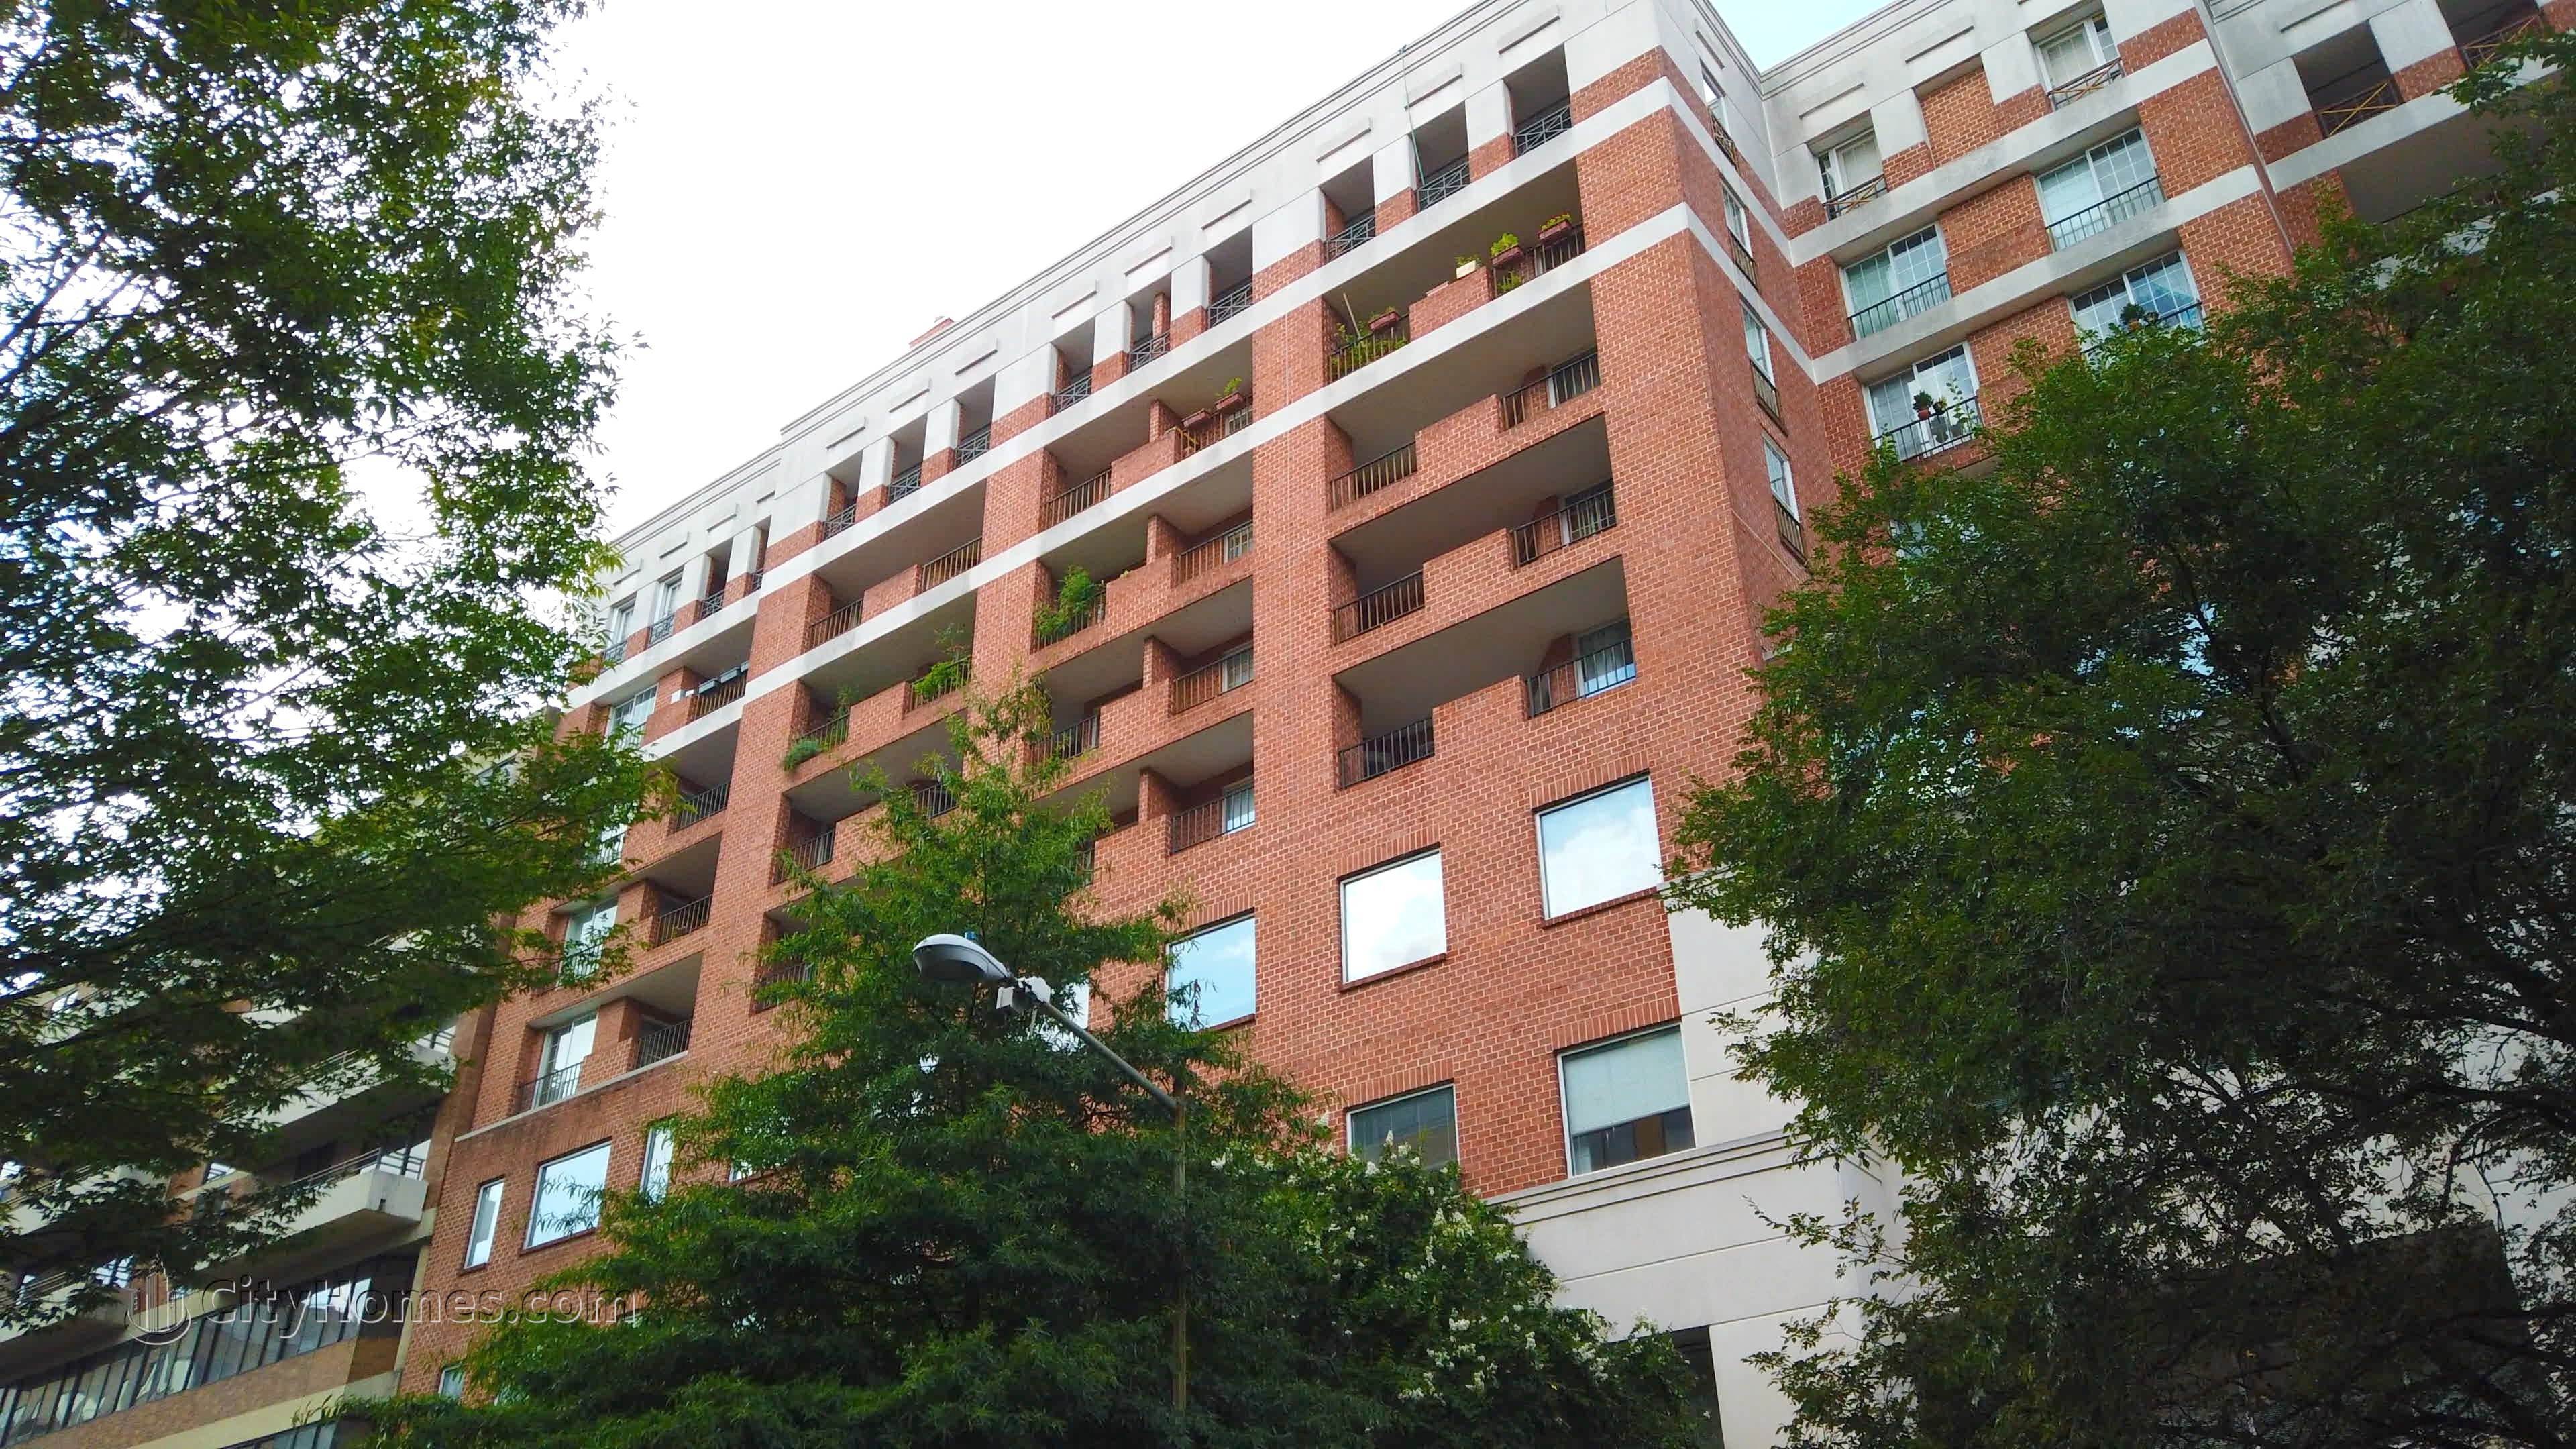 8. Metropolitan Condos xây dựng tại 1230 23rd St NW, West End, Washington, DC 20037